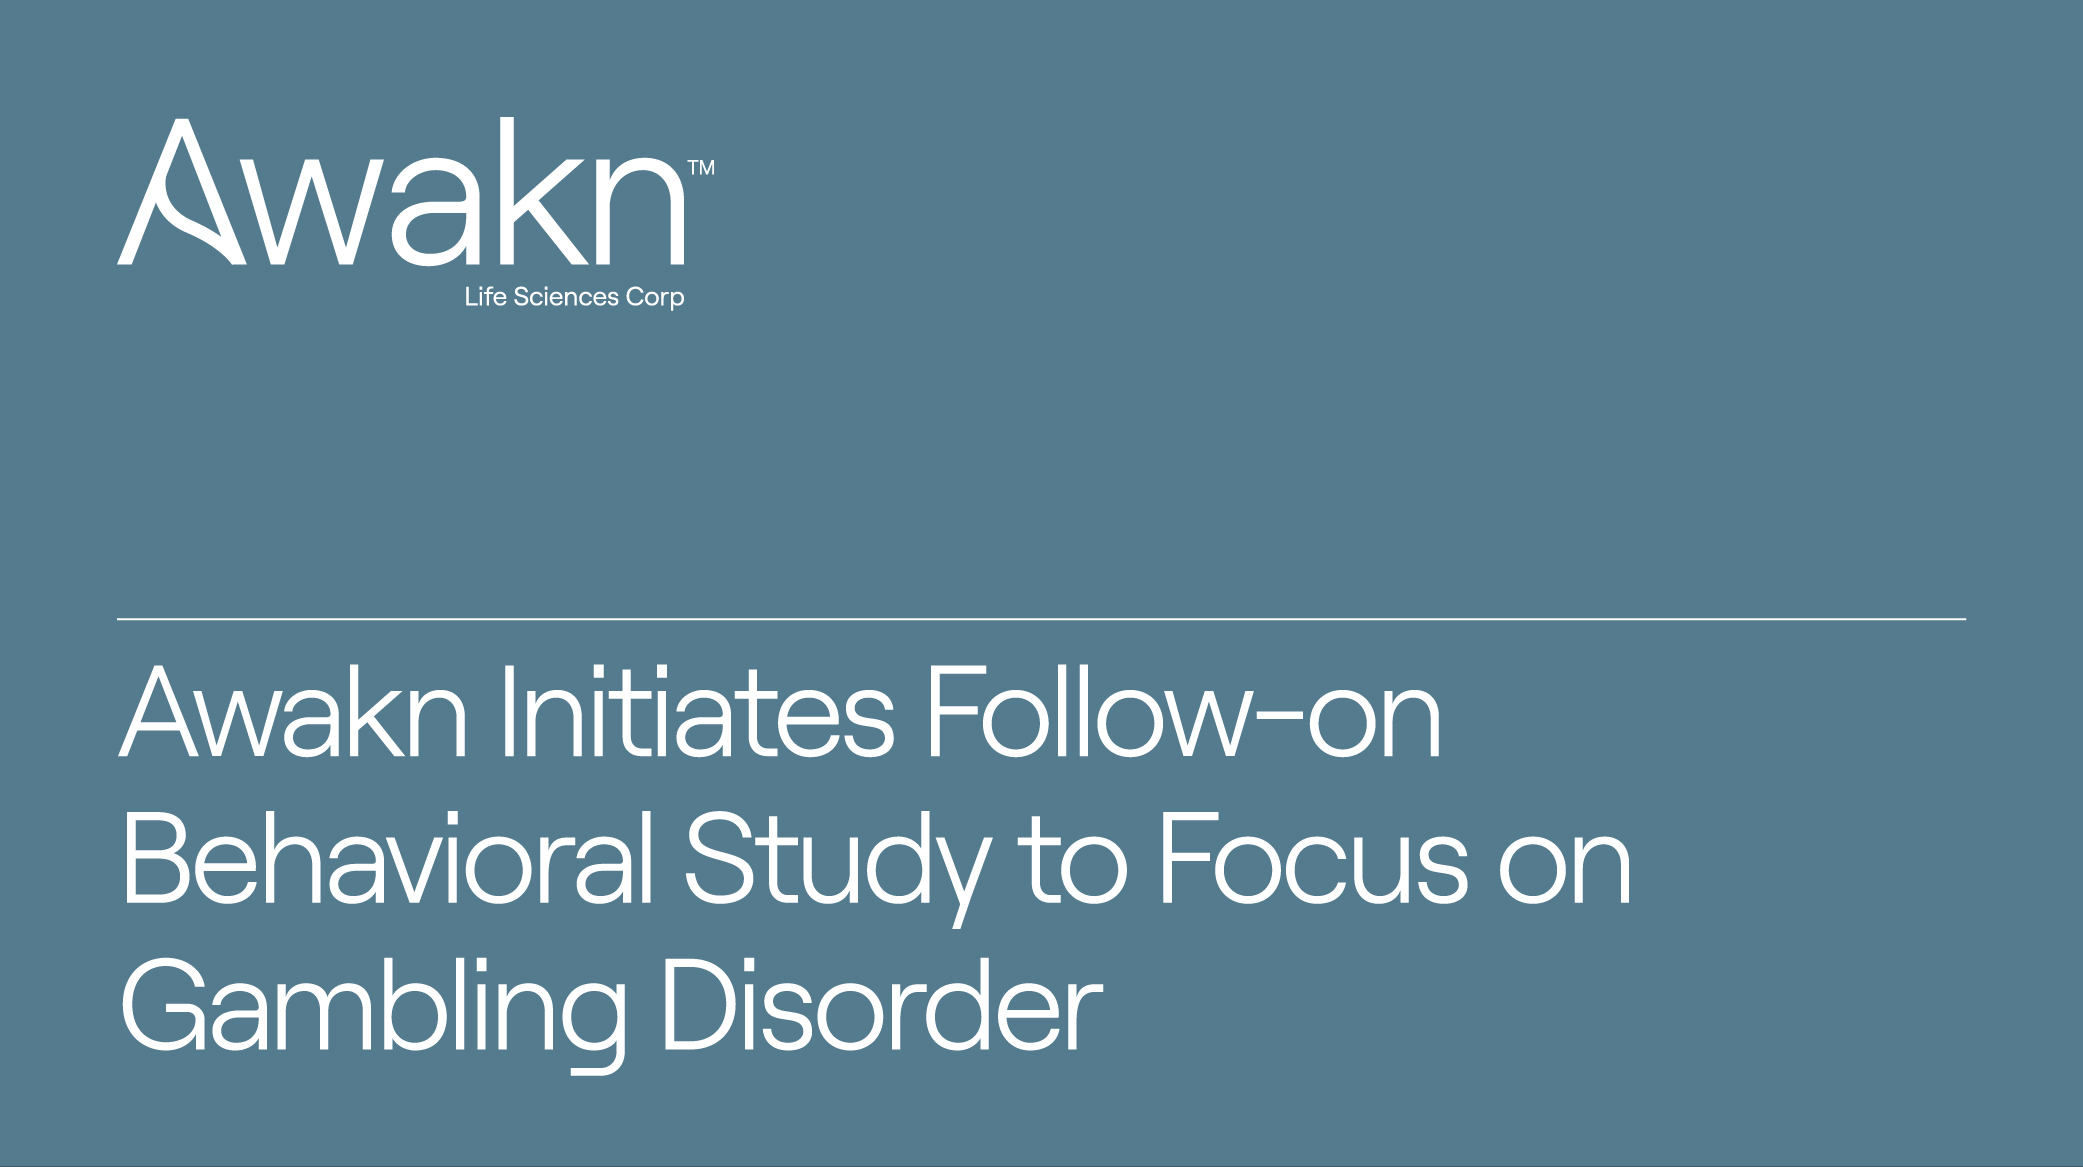 Awakn Life Sciences Initiates Follow-on Behavioral Study to Focus on Gambling Disorder